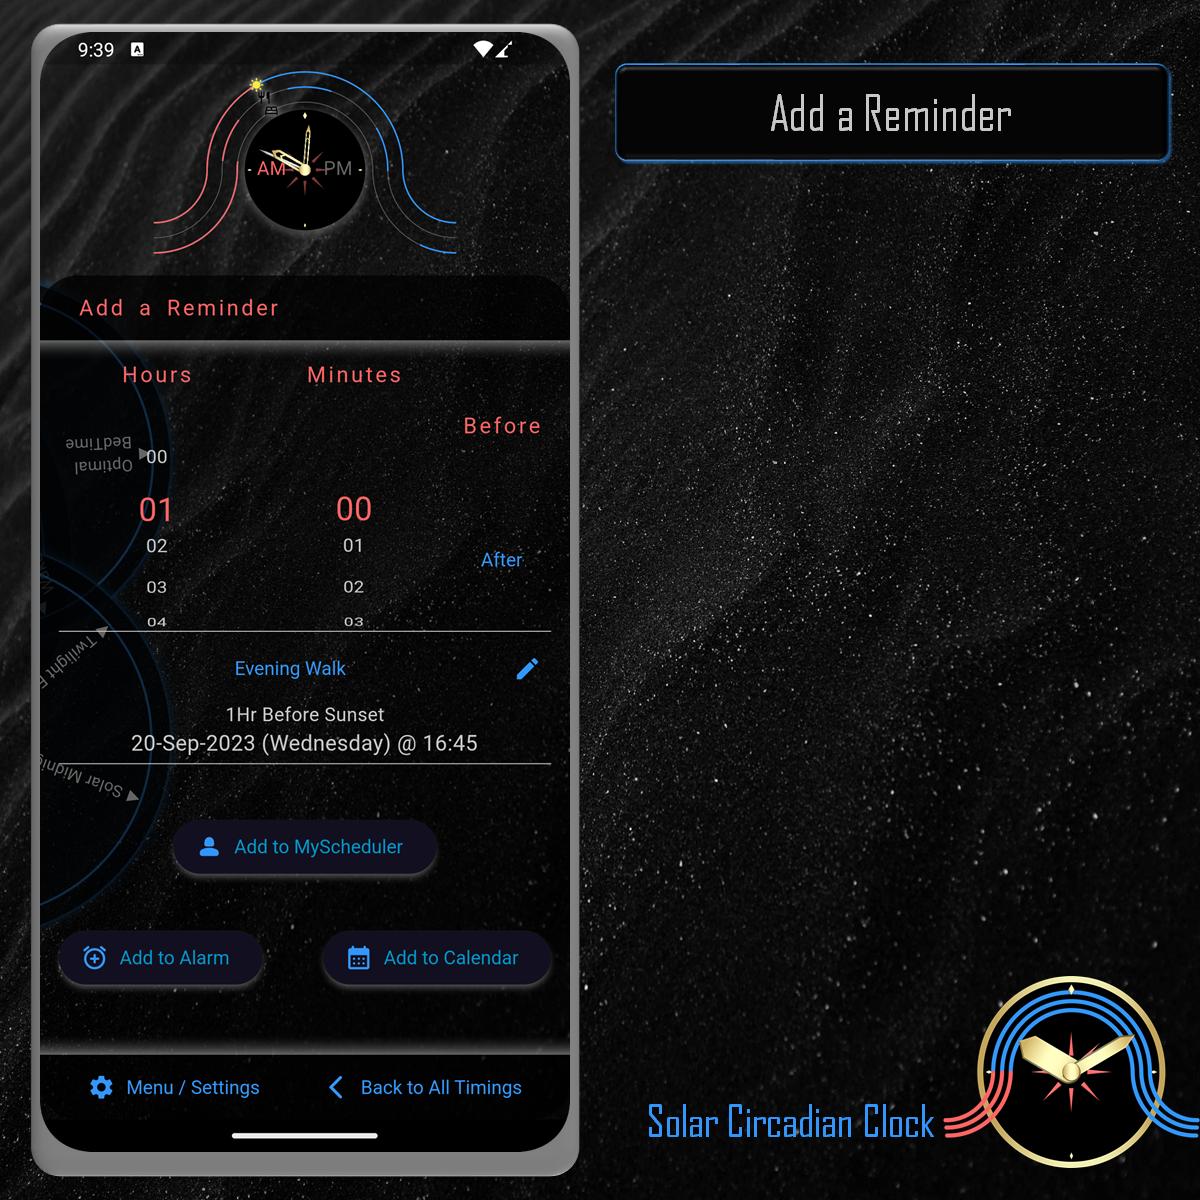 Solar Circadian Clock App - Data Screen - All Timings